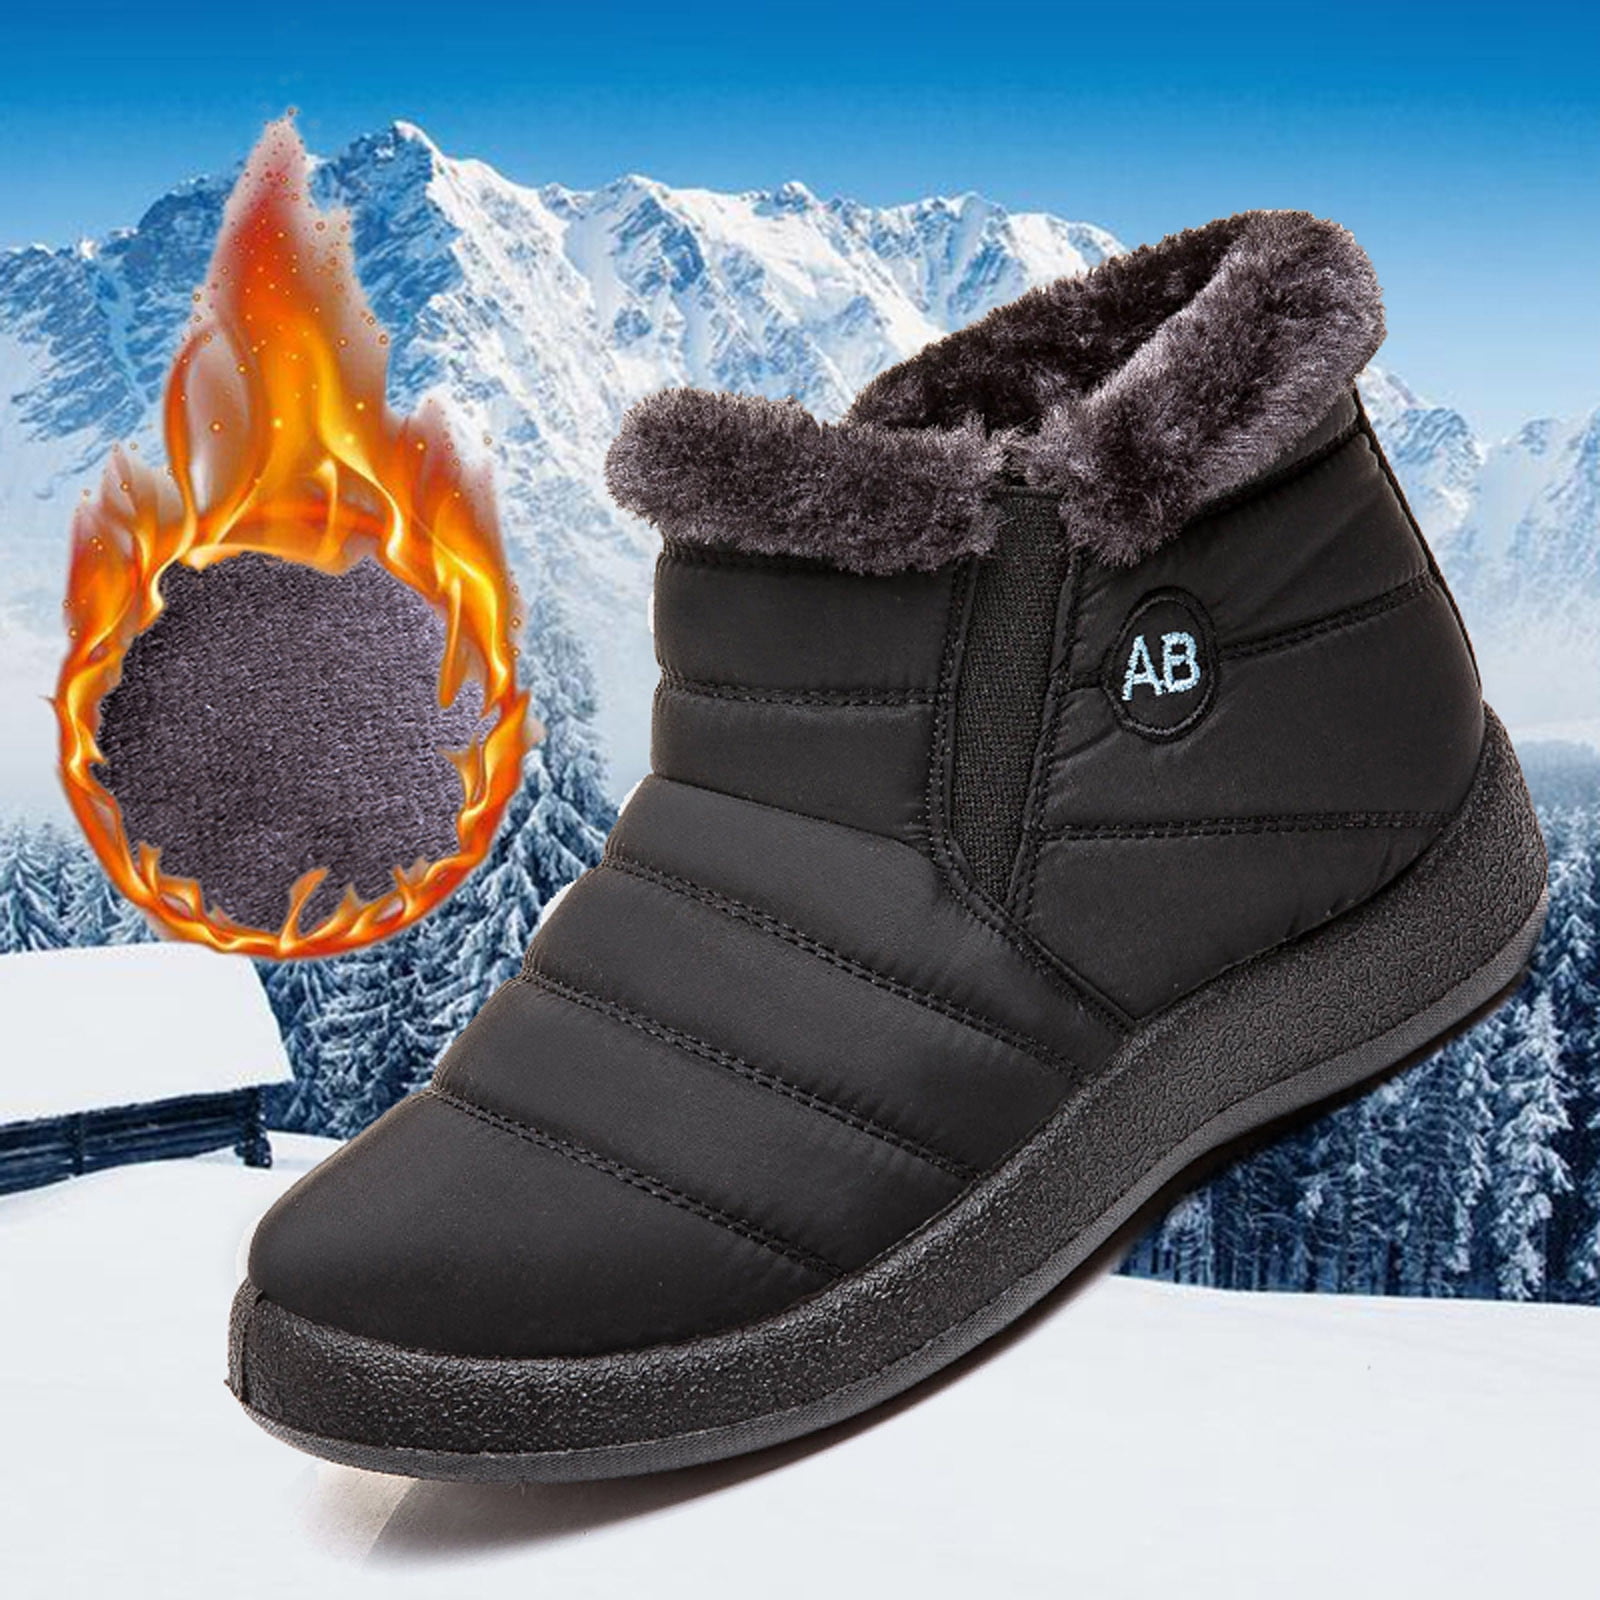 OKBOP Women's Snow Boots-Chukka Warm Christmas Knee High Black Boots ...